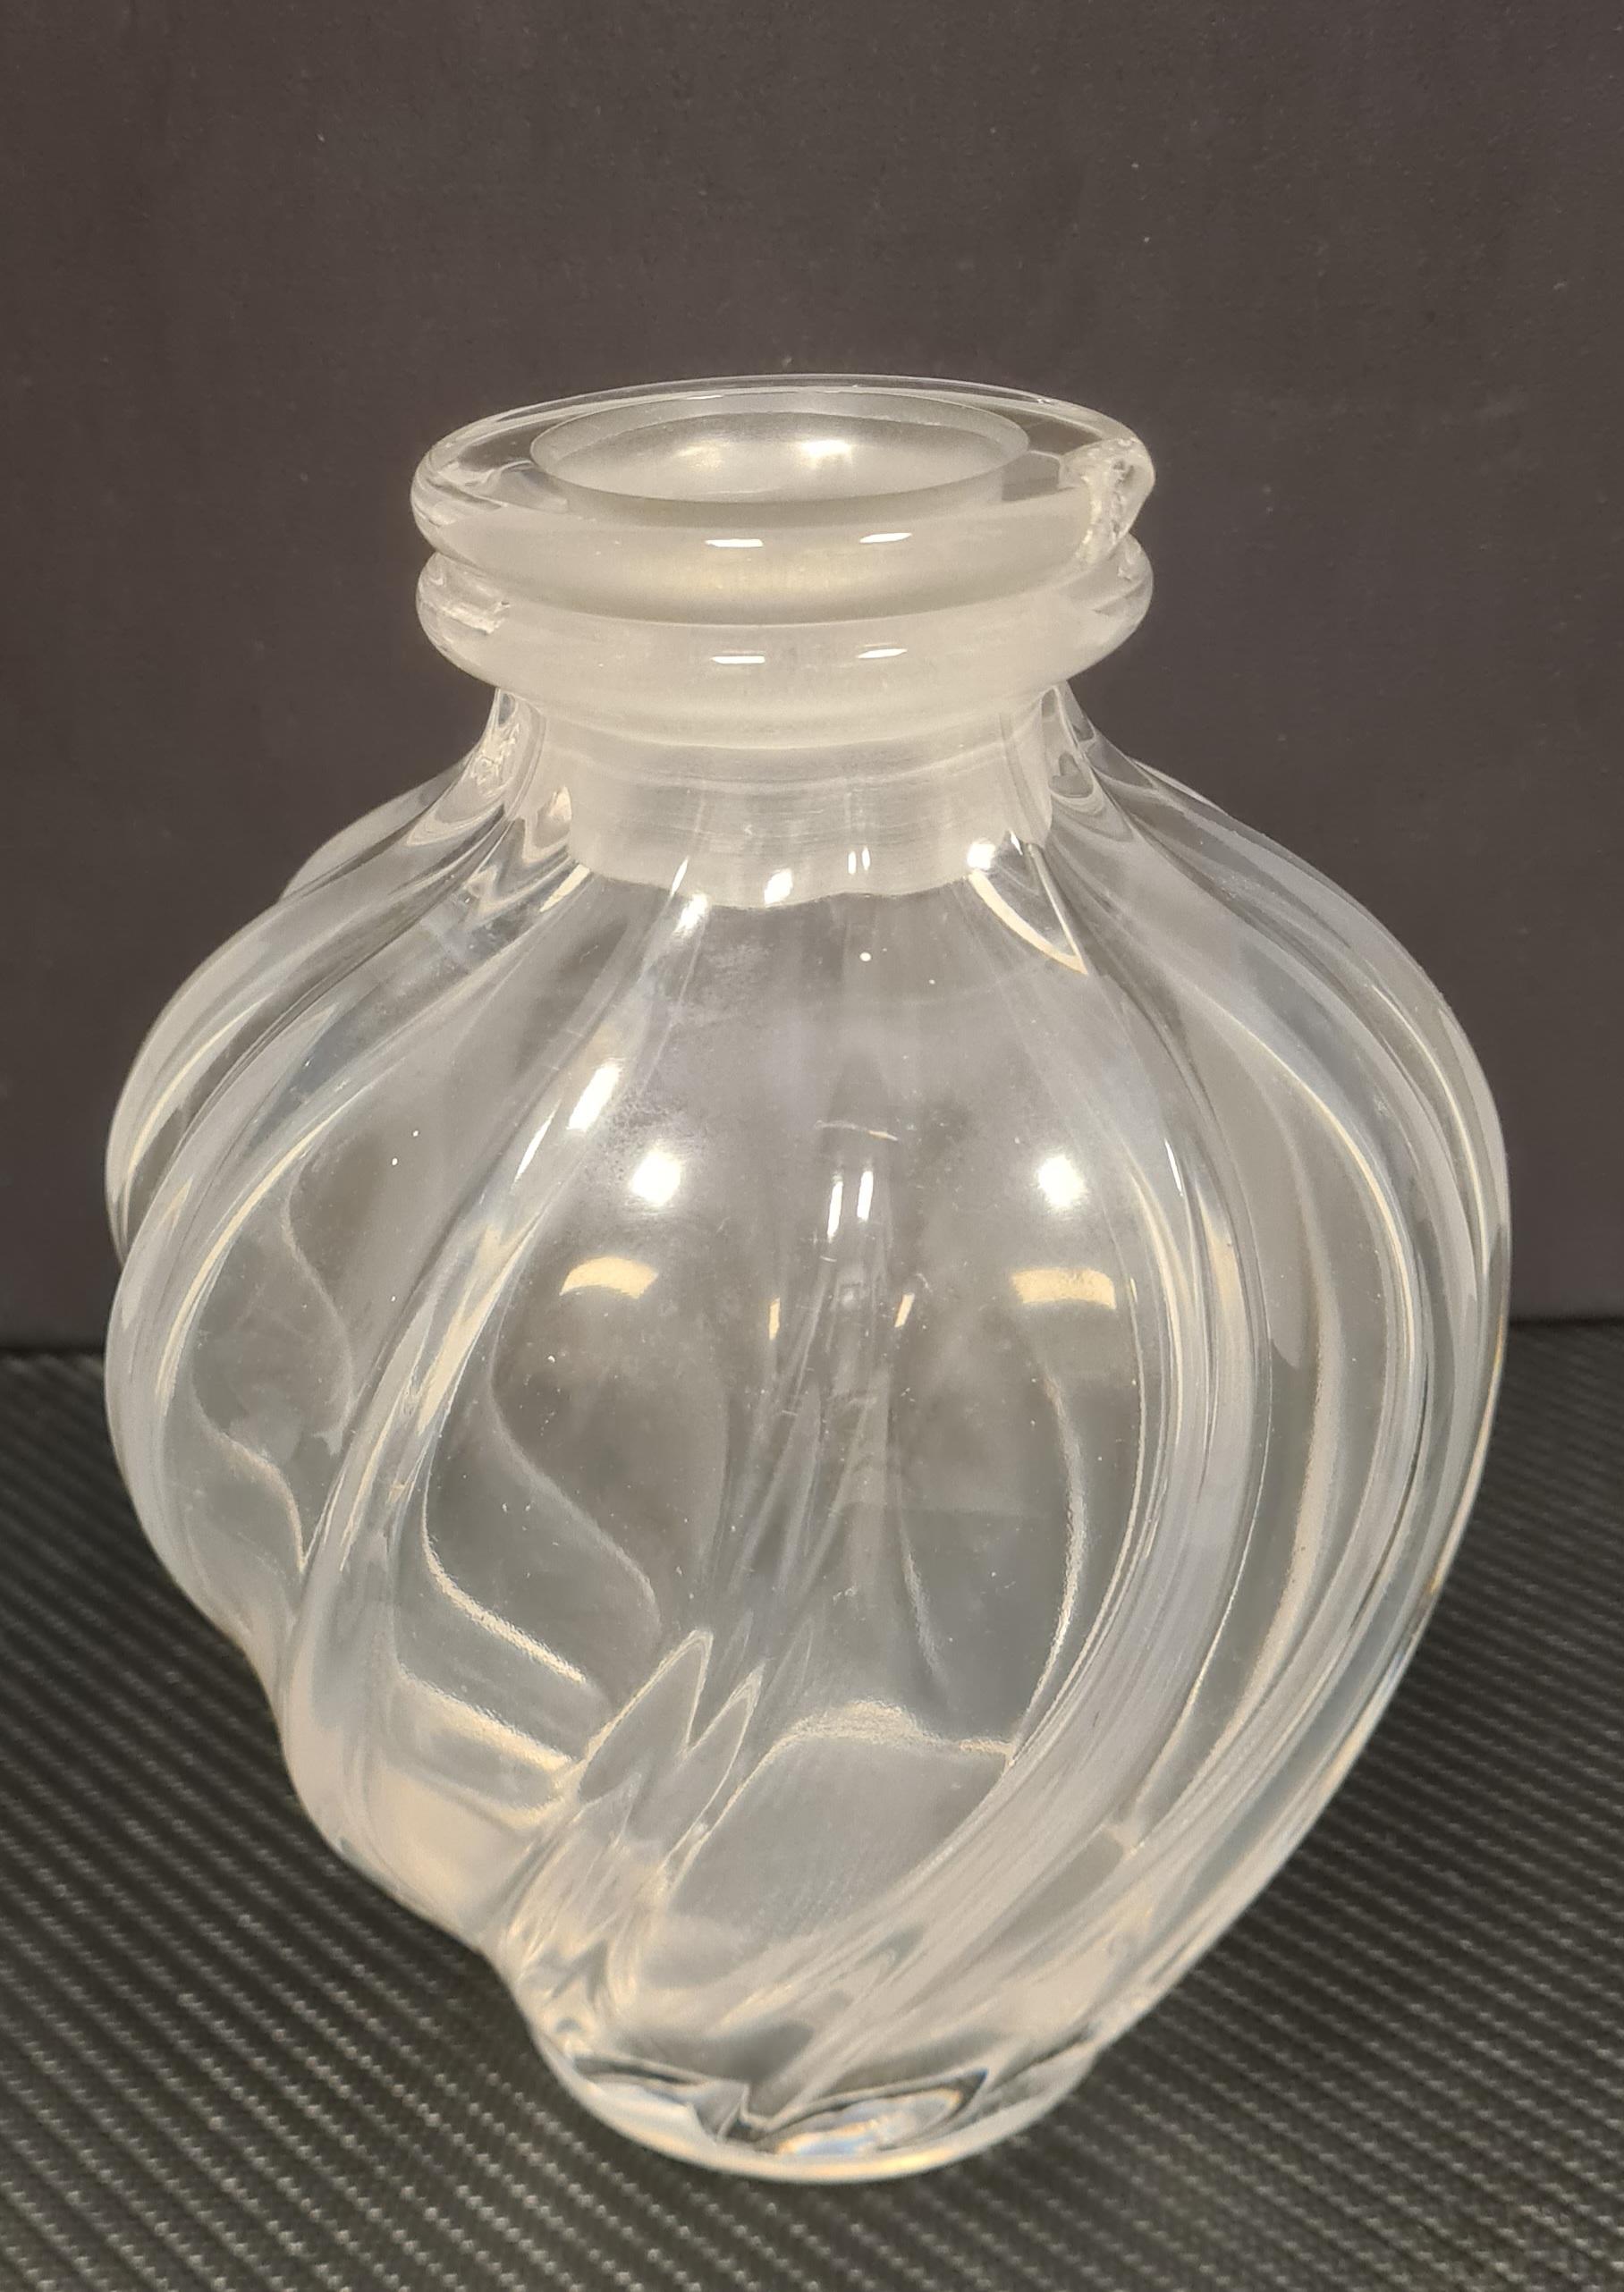 Large collectible Lalique glass bottle of the perfume L'air du temps For Sale 1